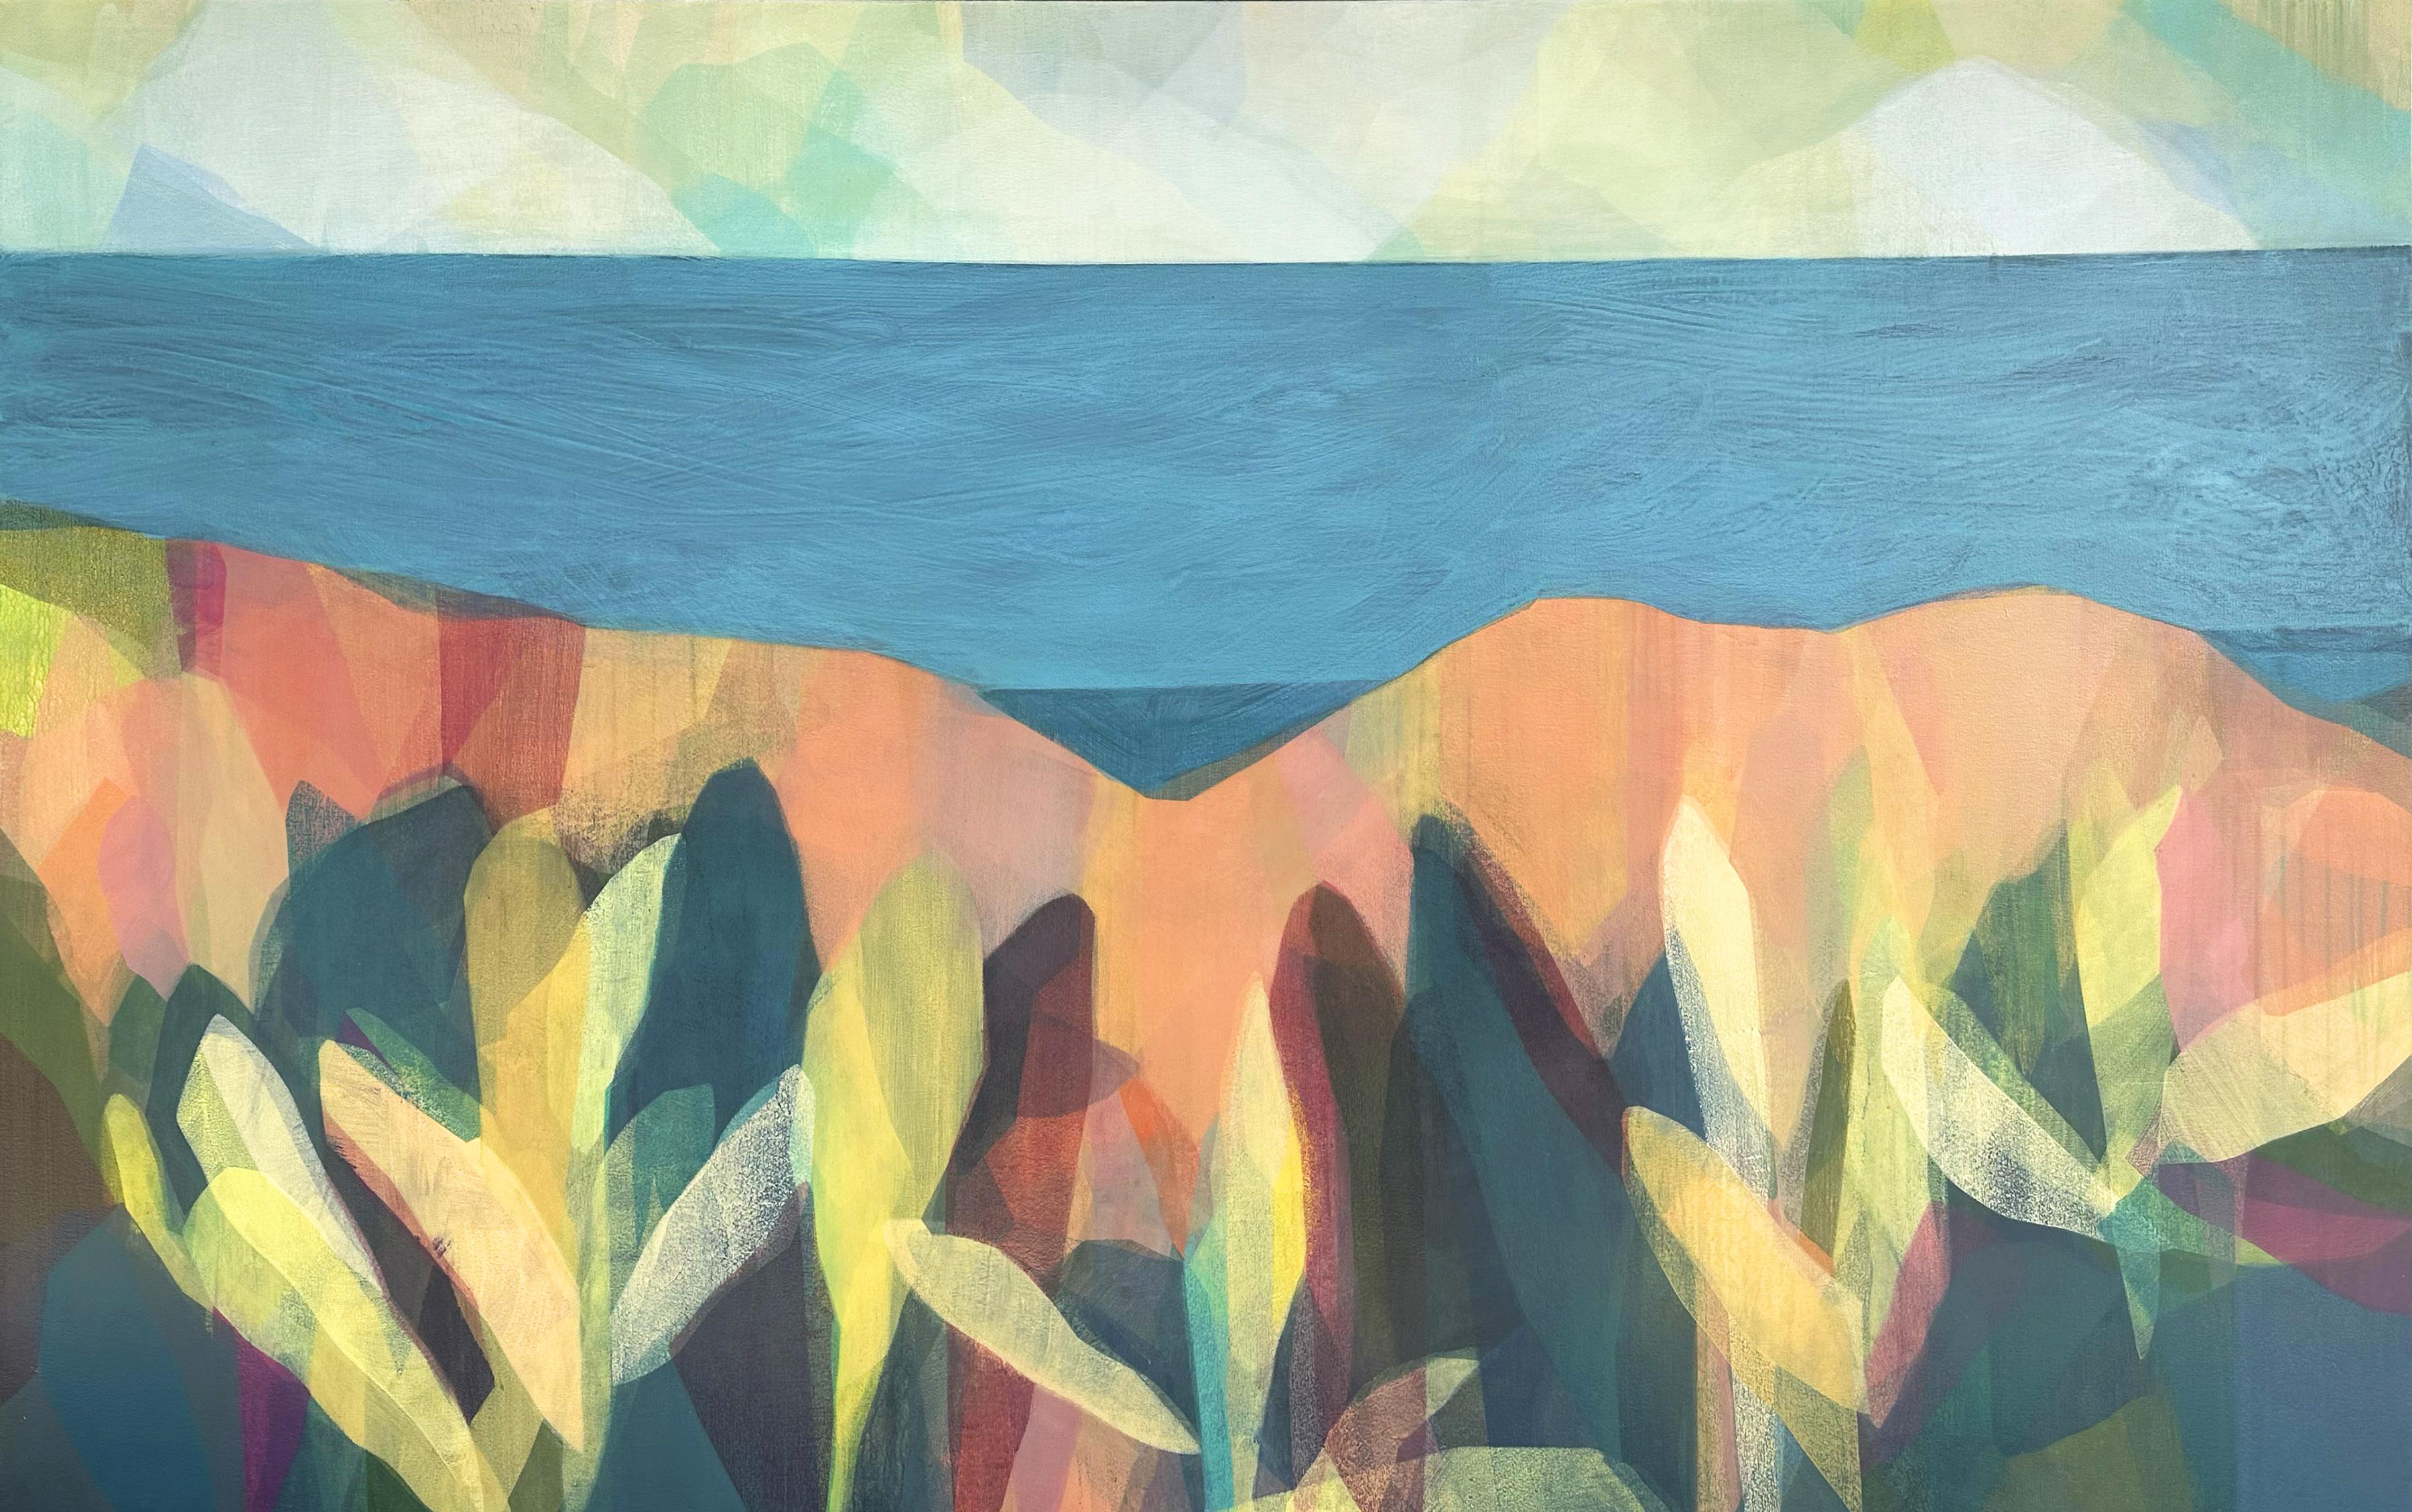 Landscape Painting Katherine Sandoz - "(uhuru) hanawi lookout n° 2" - paysage abstrait - Hawaï - paysage océanique